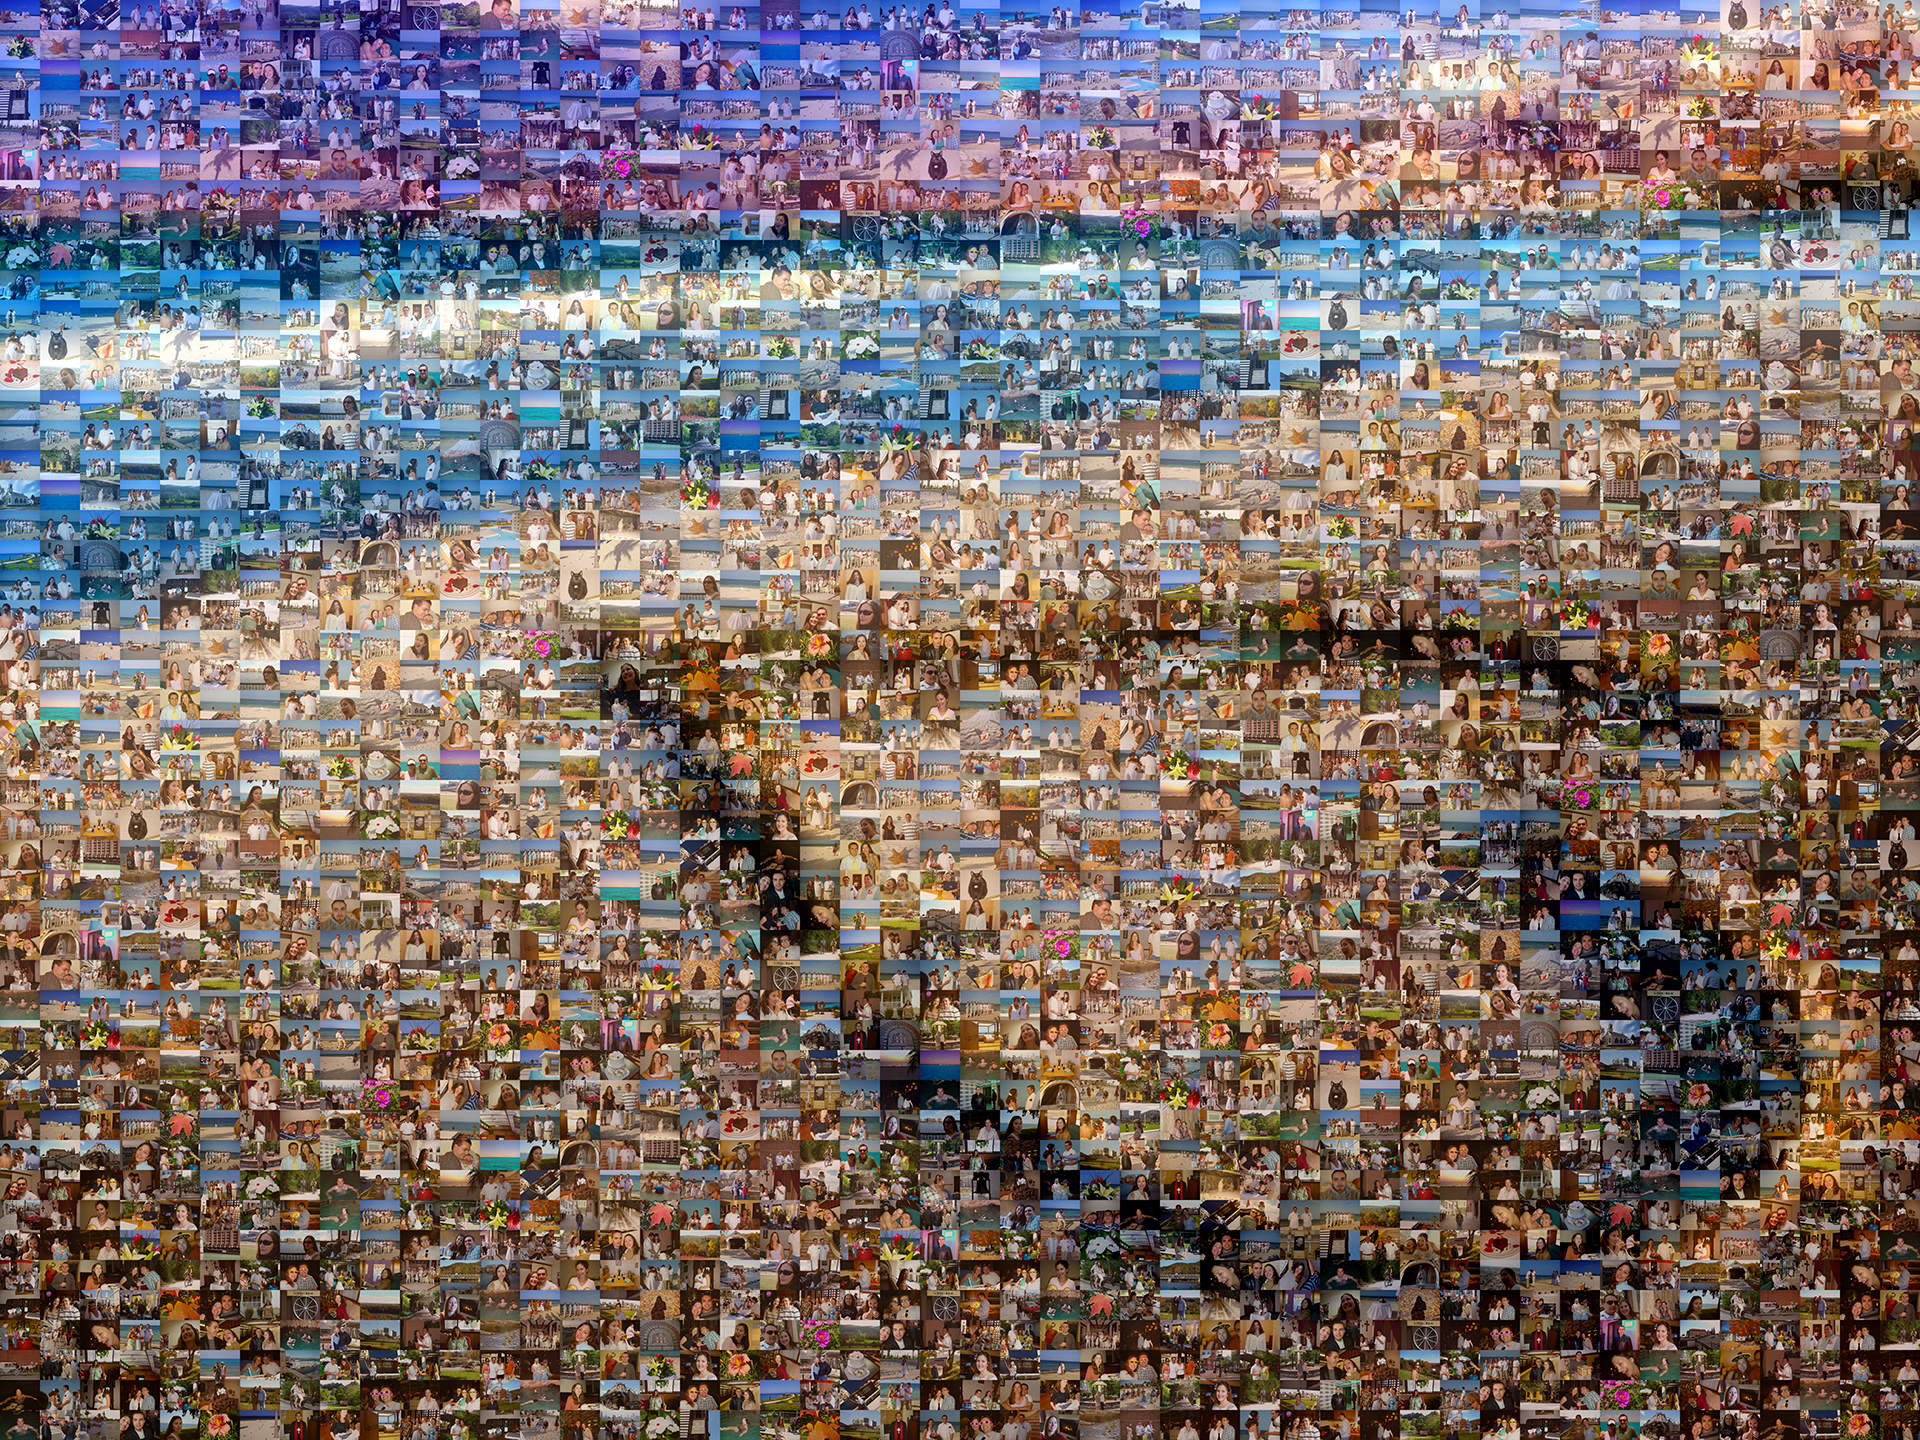 photo mosaic created using 554 vacation photos